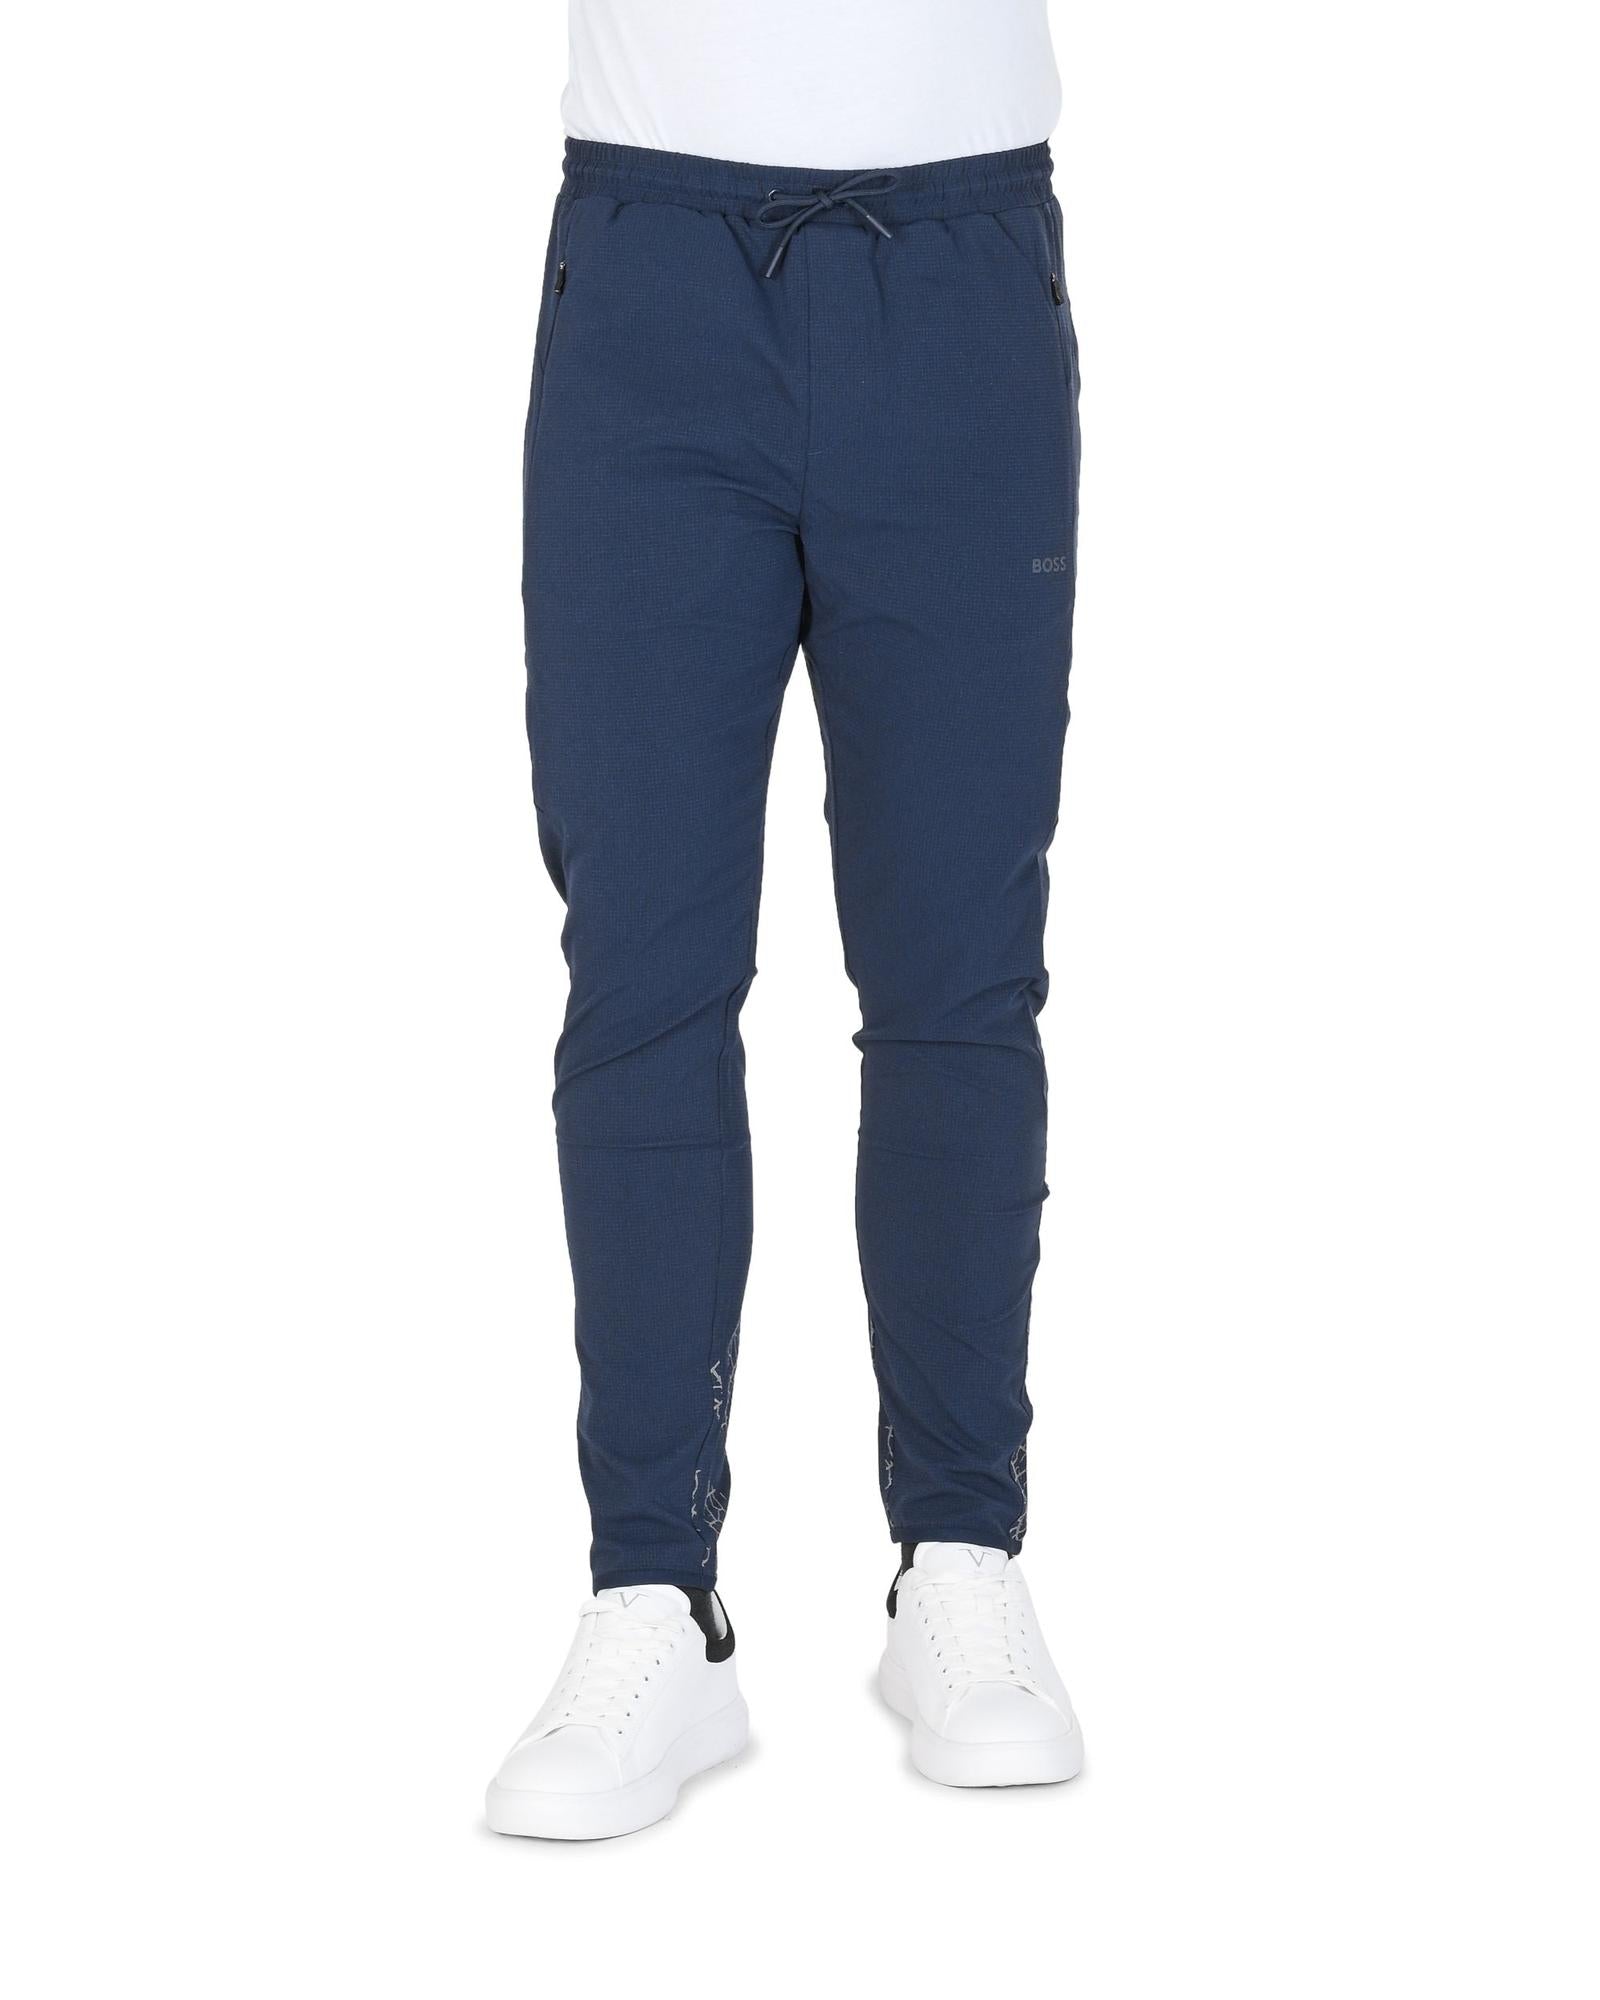 Hugo Boss Men's Recycled Polyester Navy Pants in Navy blue - L